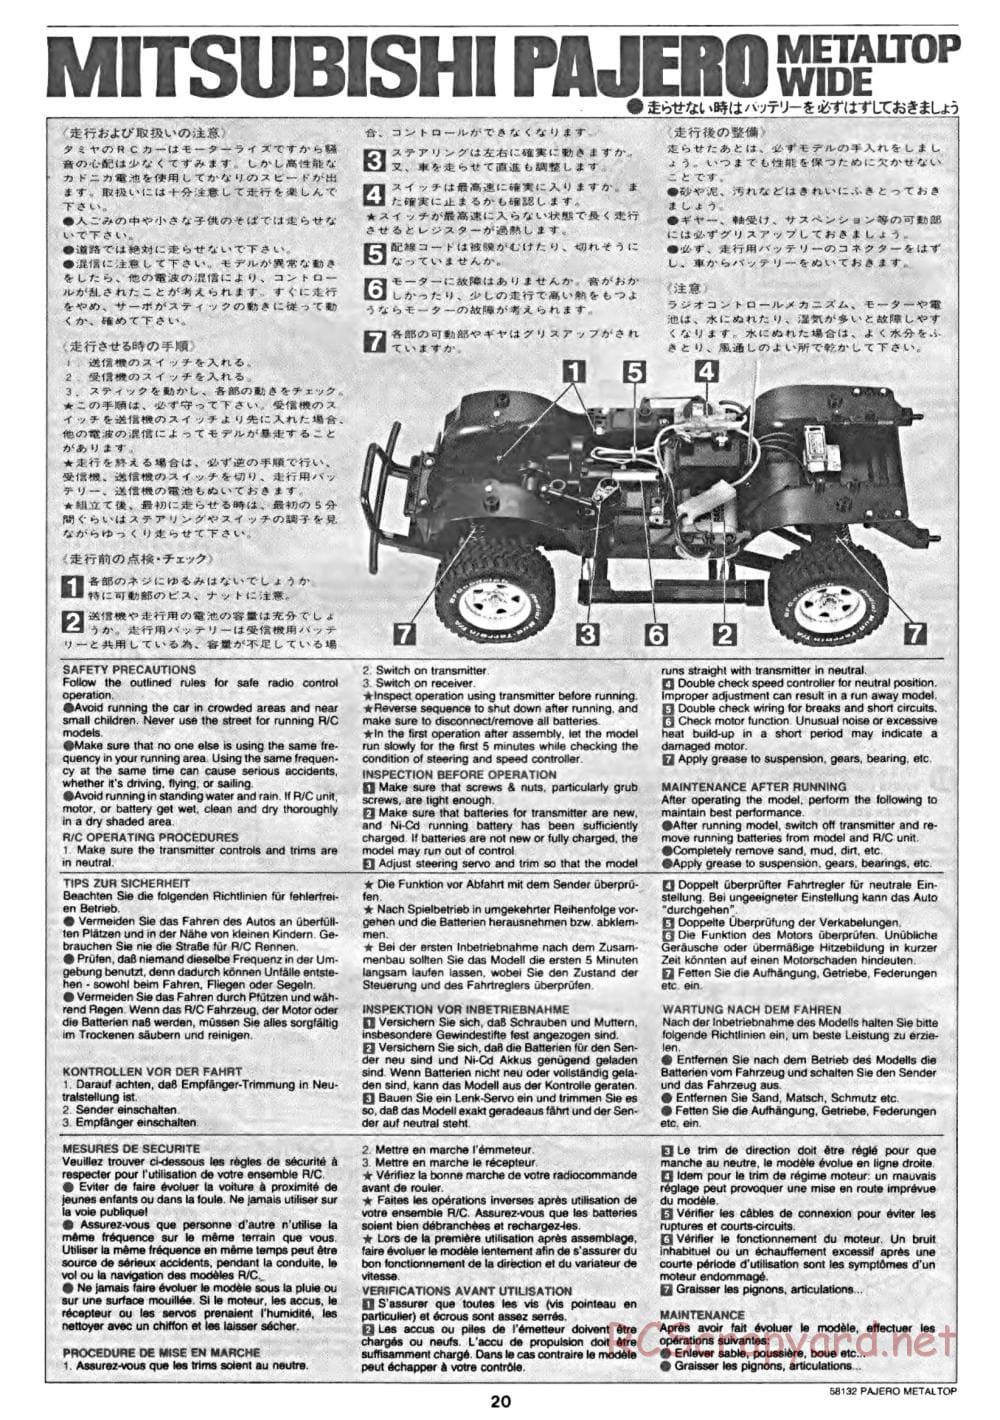 Tamiya - Mitsubishi Pajero Metaltop Wide - CC-01 Chassis - Manual - Page 20